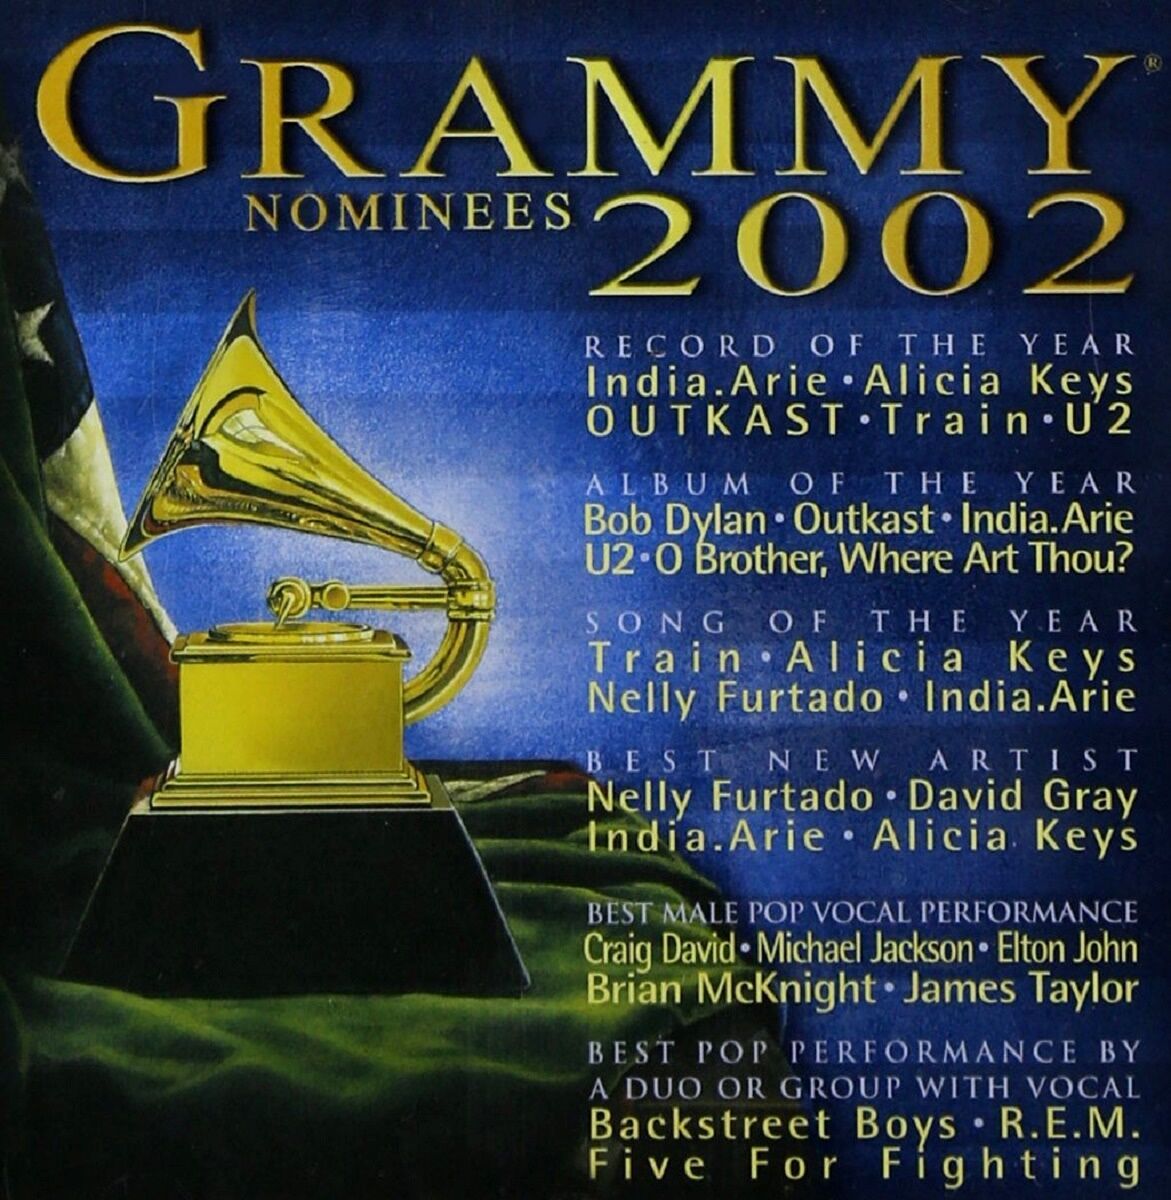 GRAMMY NOMINEES 2002 - VARIOUS (CD)